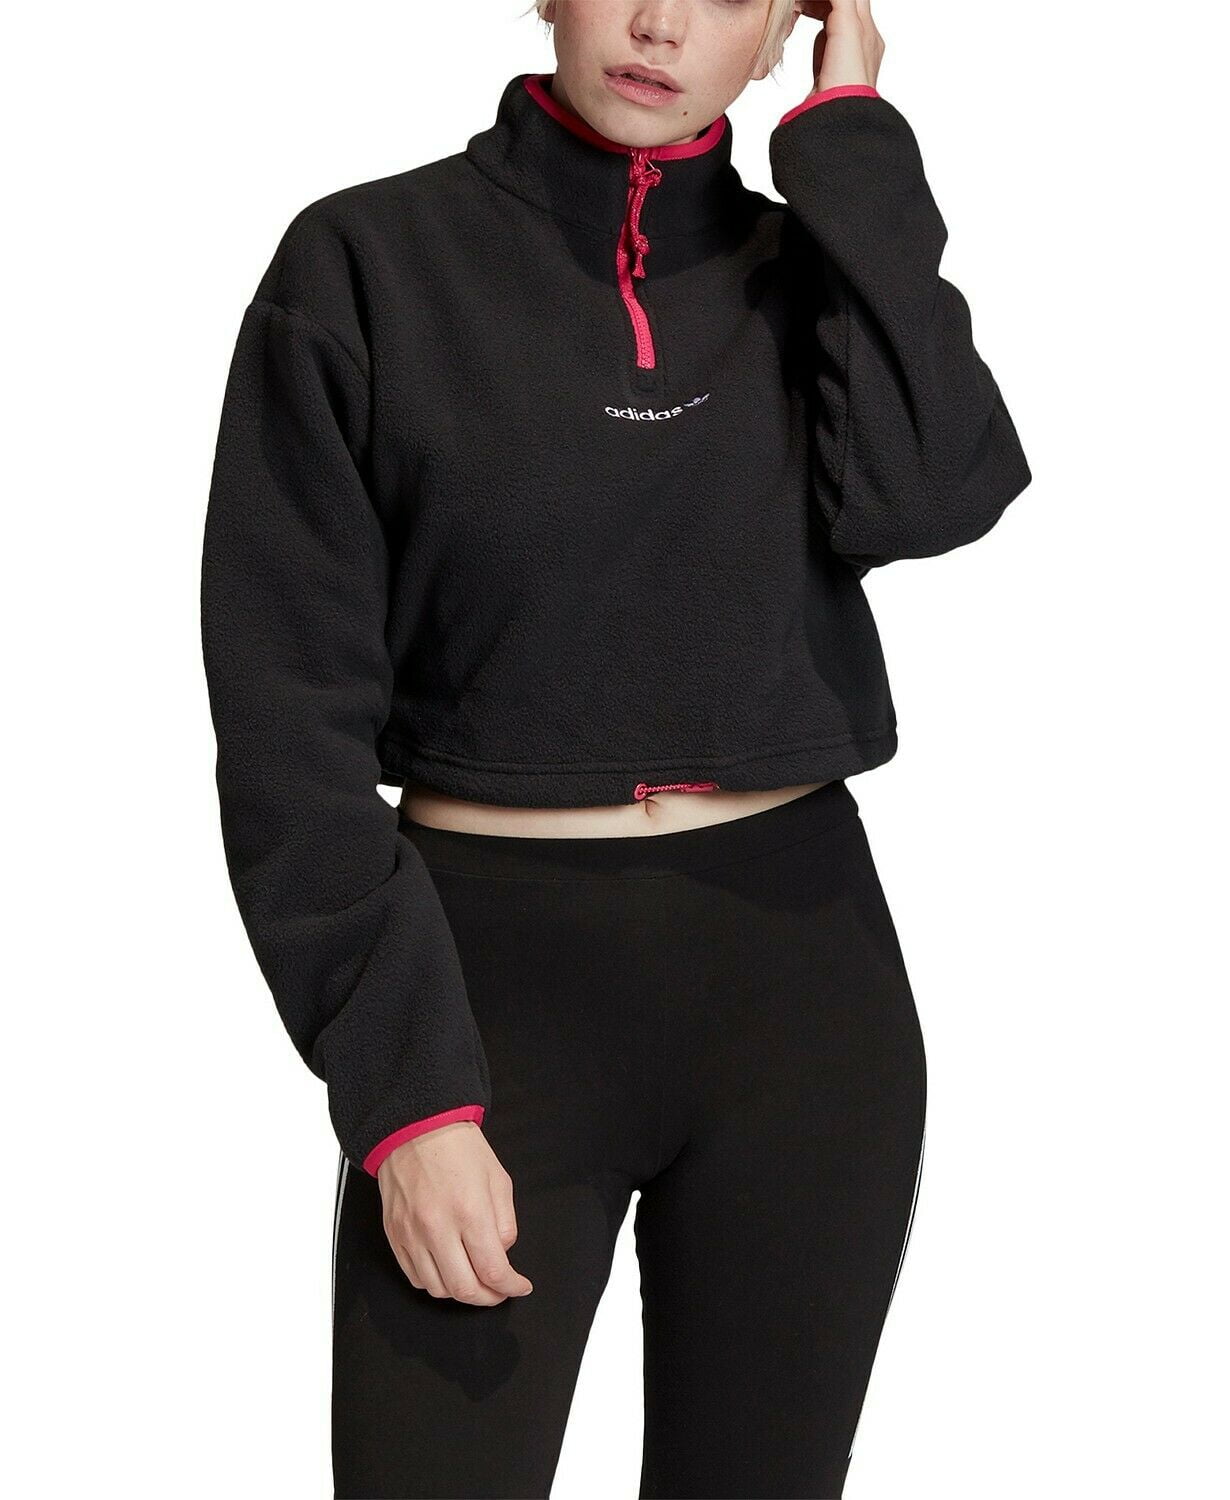 Verdulero basura morir Adidas Originals Women Polar Fleece Cropped Half-Zip Top Black Hot Pink  Size XS - Walmart.com